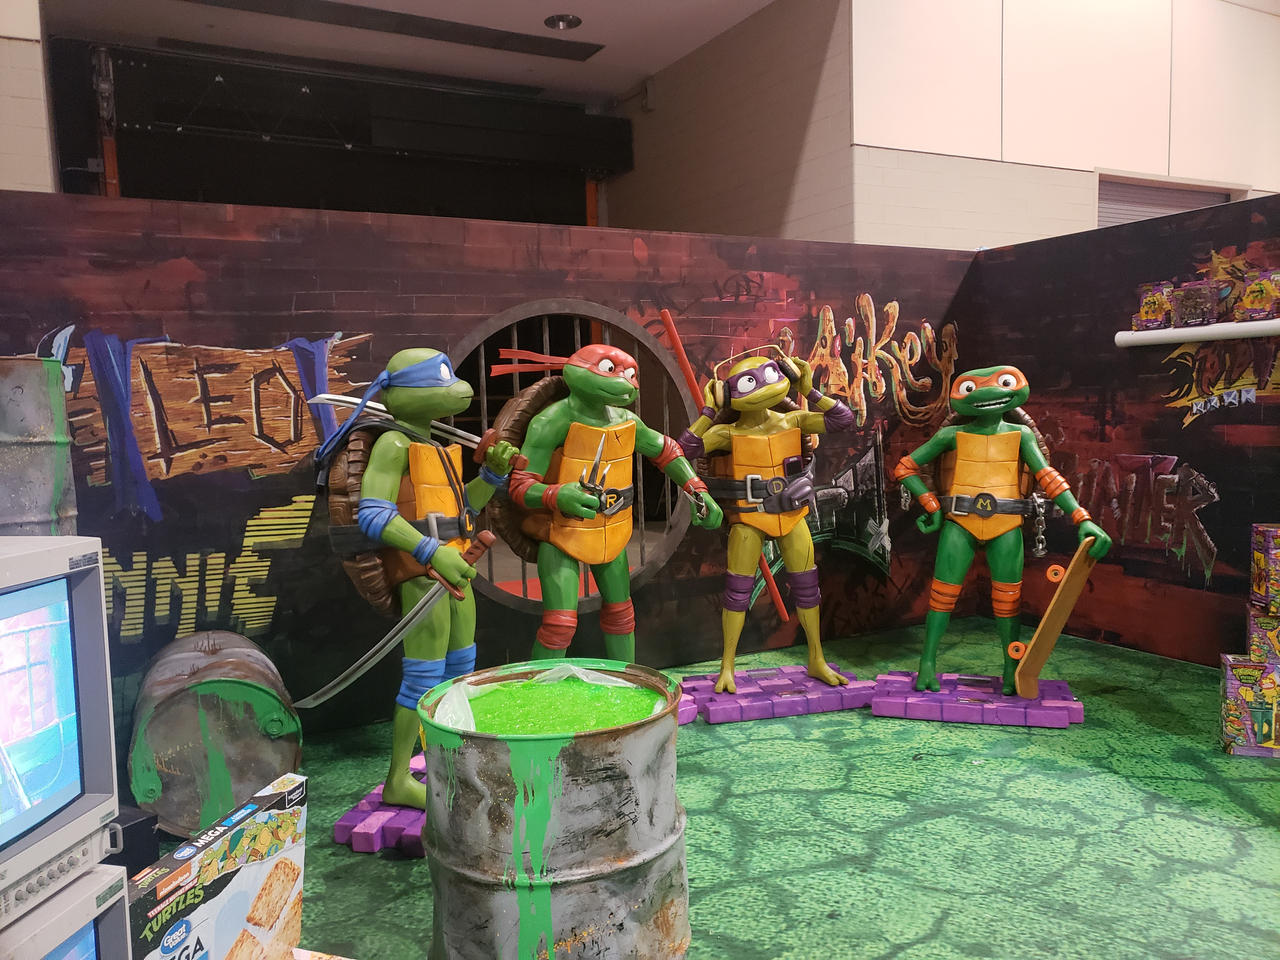 Teenage Mutant Ninja Turtles: Mutant Mayhem Faces FANEXPO CANADA 2023 –  Paramount Shop